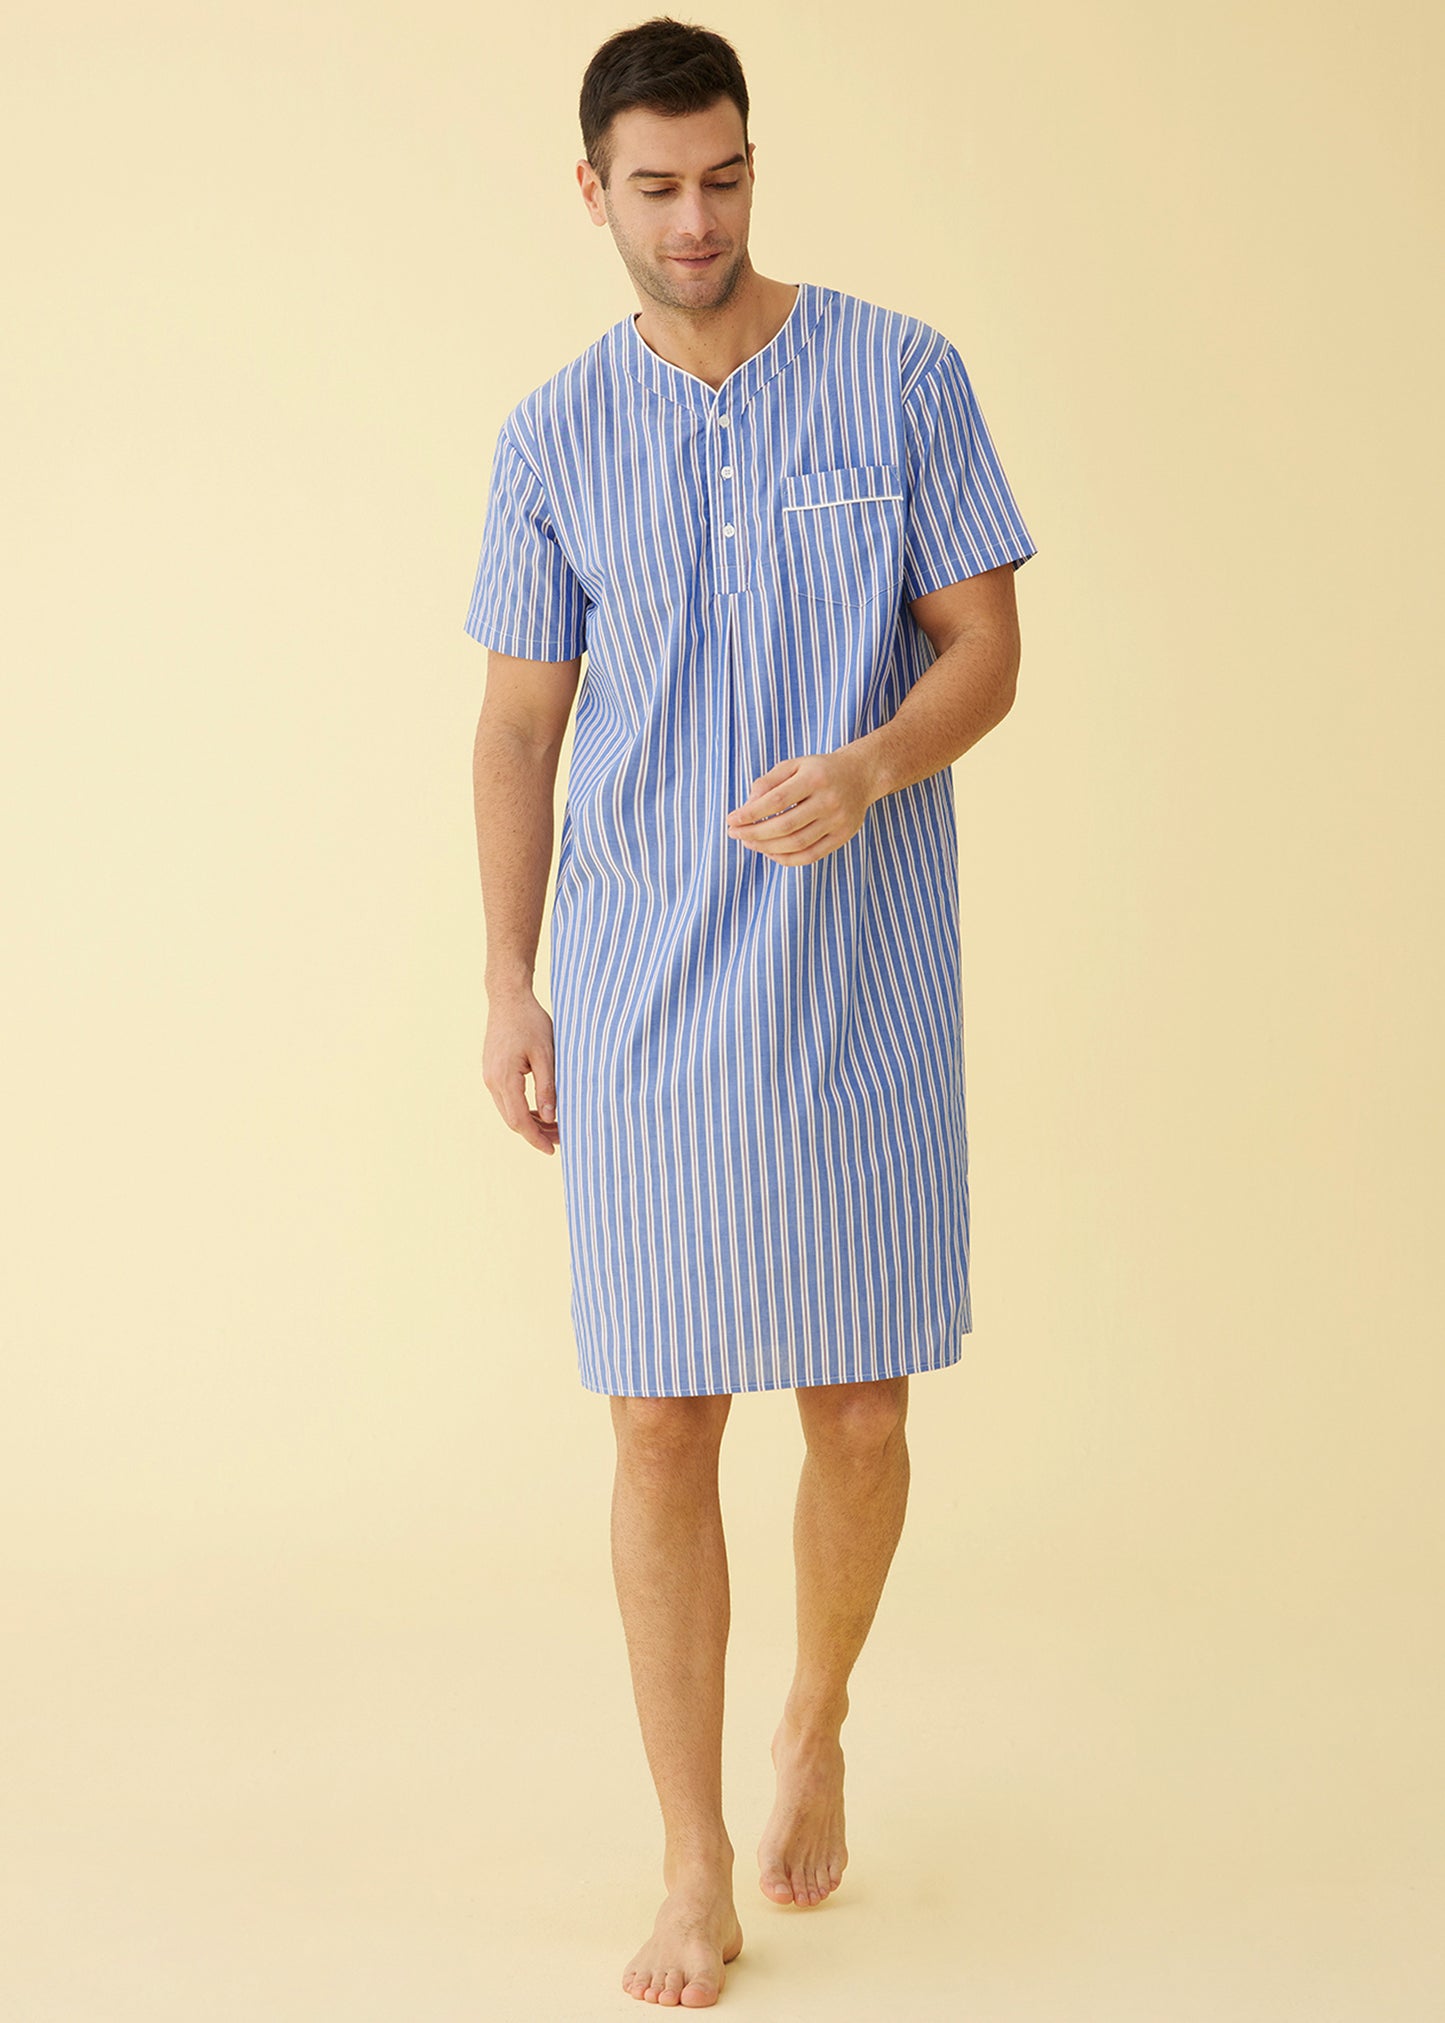 Men's Plaid Nightshirt Cotton Sleep Shirt